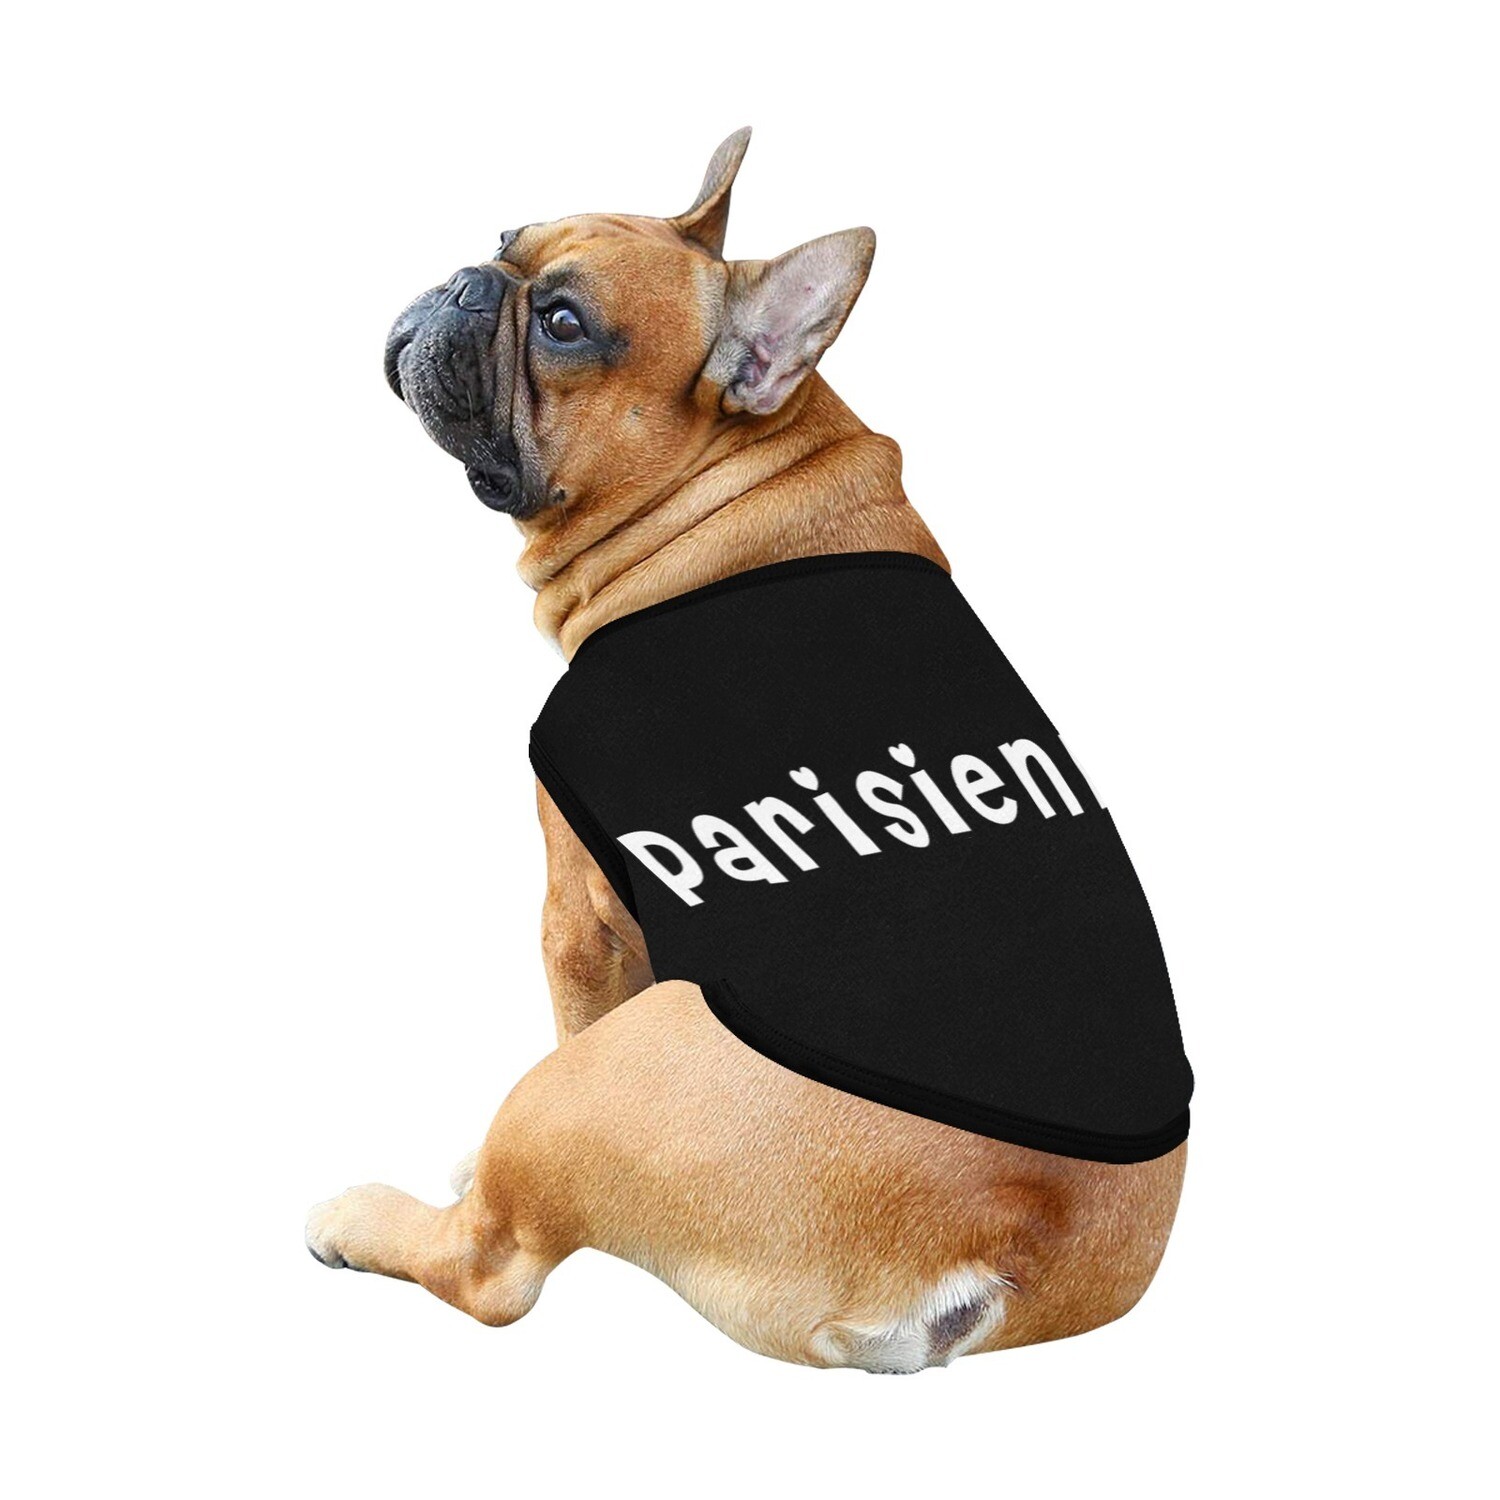 🐕 David Rose Parisienne Dog t-shirt, Dog Tank Top, Dog shirt, Dog clothes, Gifts, front back print, 7 sizes XS to 3XL, Schitt's Creek, TV series